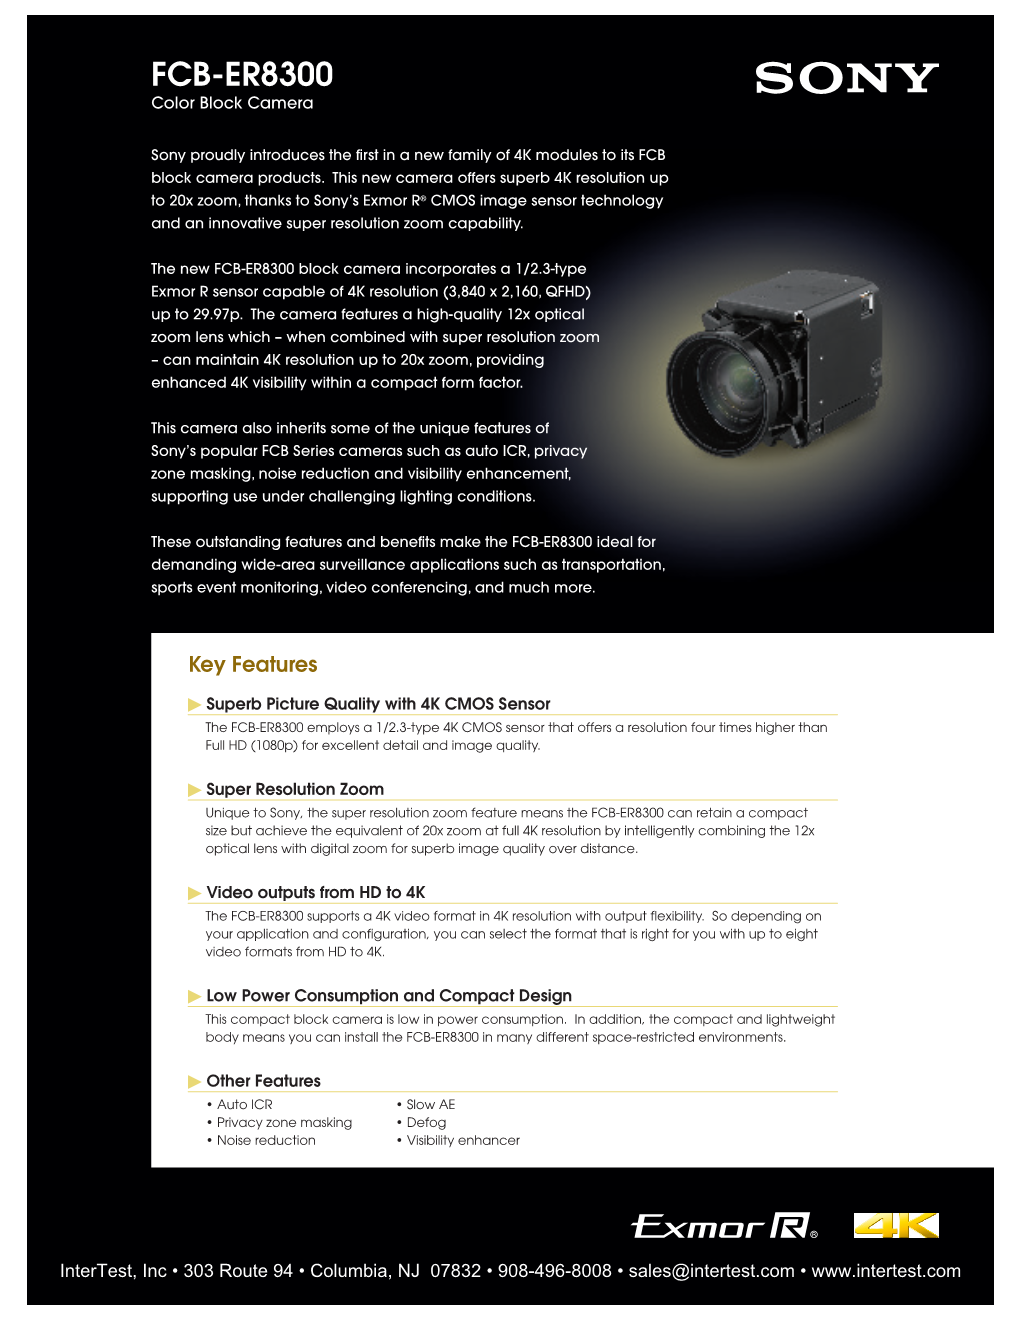 Sony FCB-ER8300 4K Camera Brochure